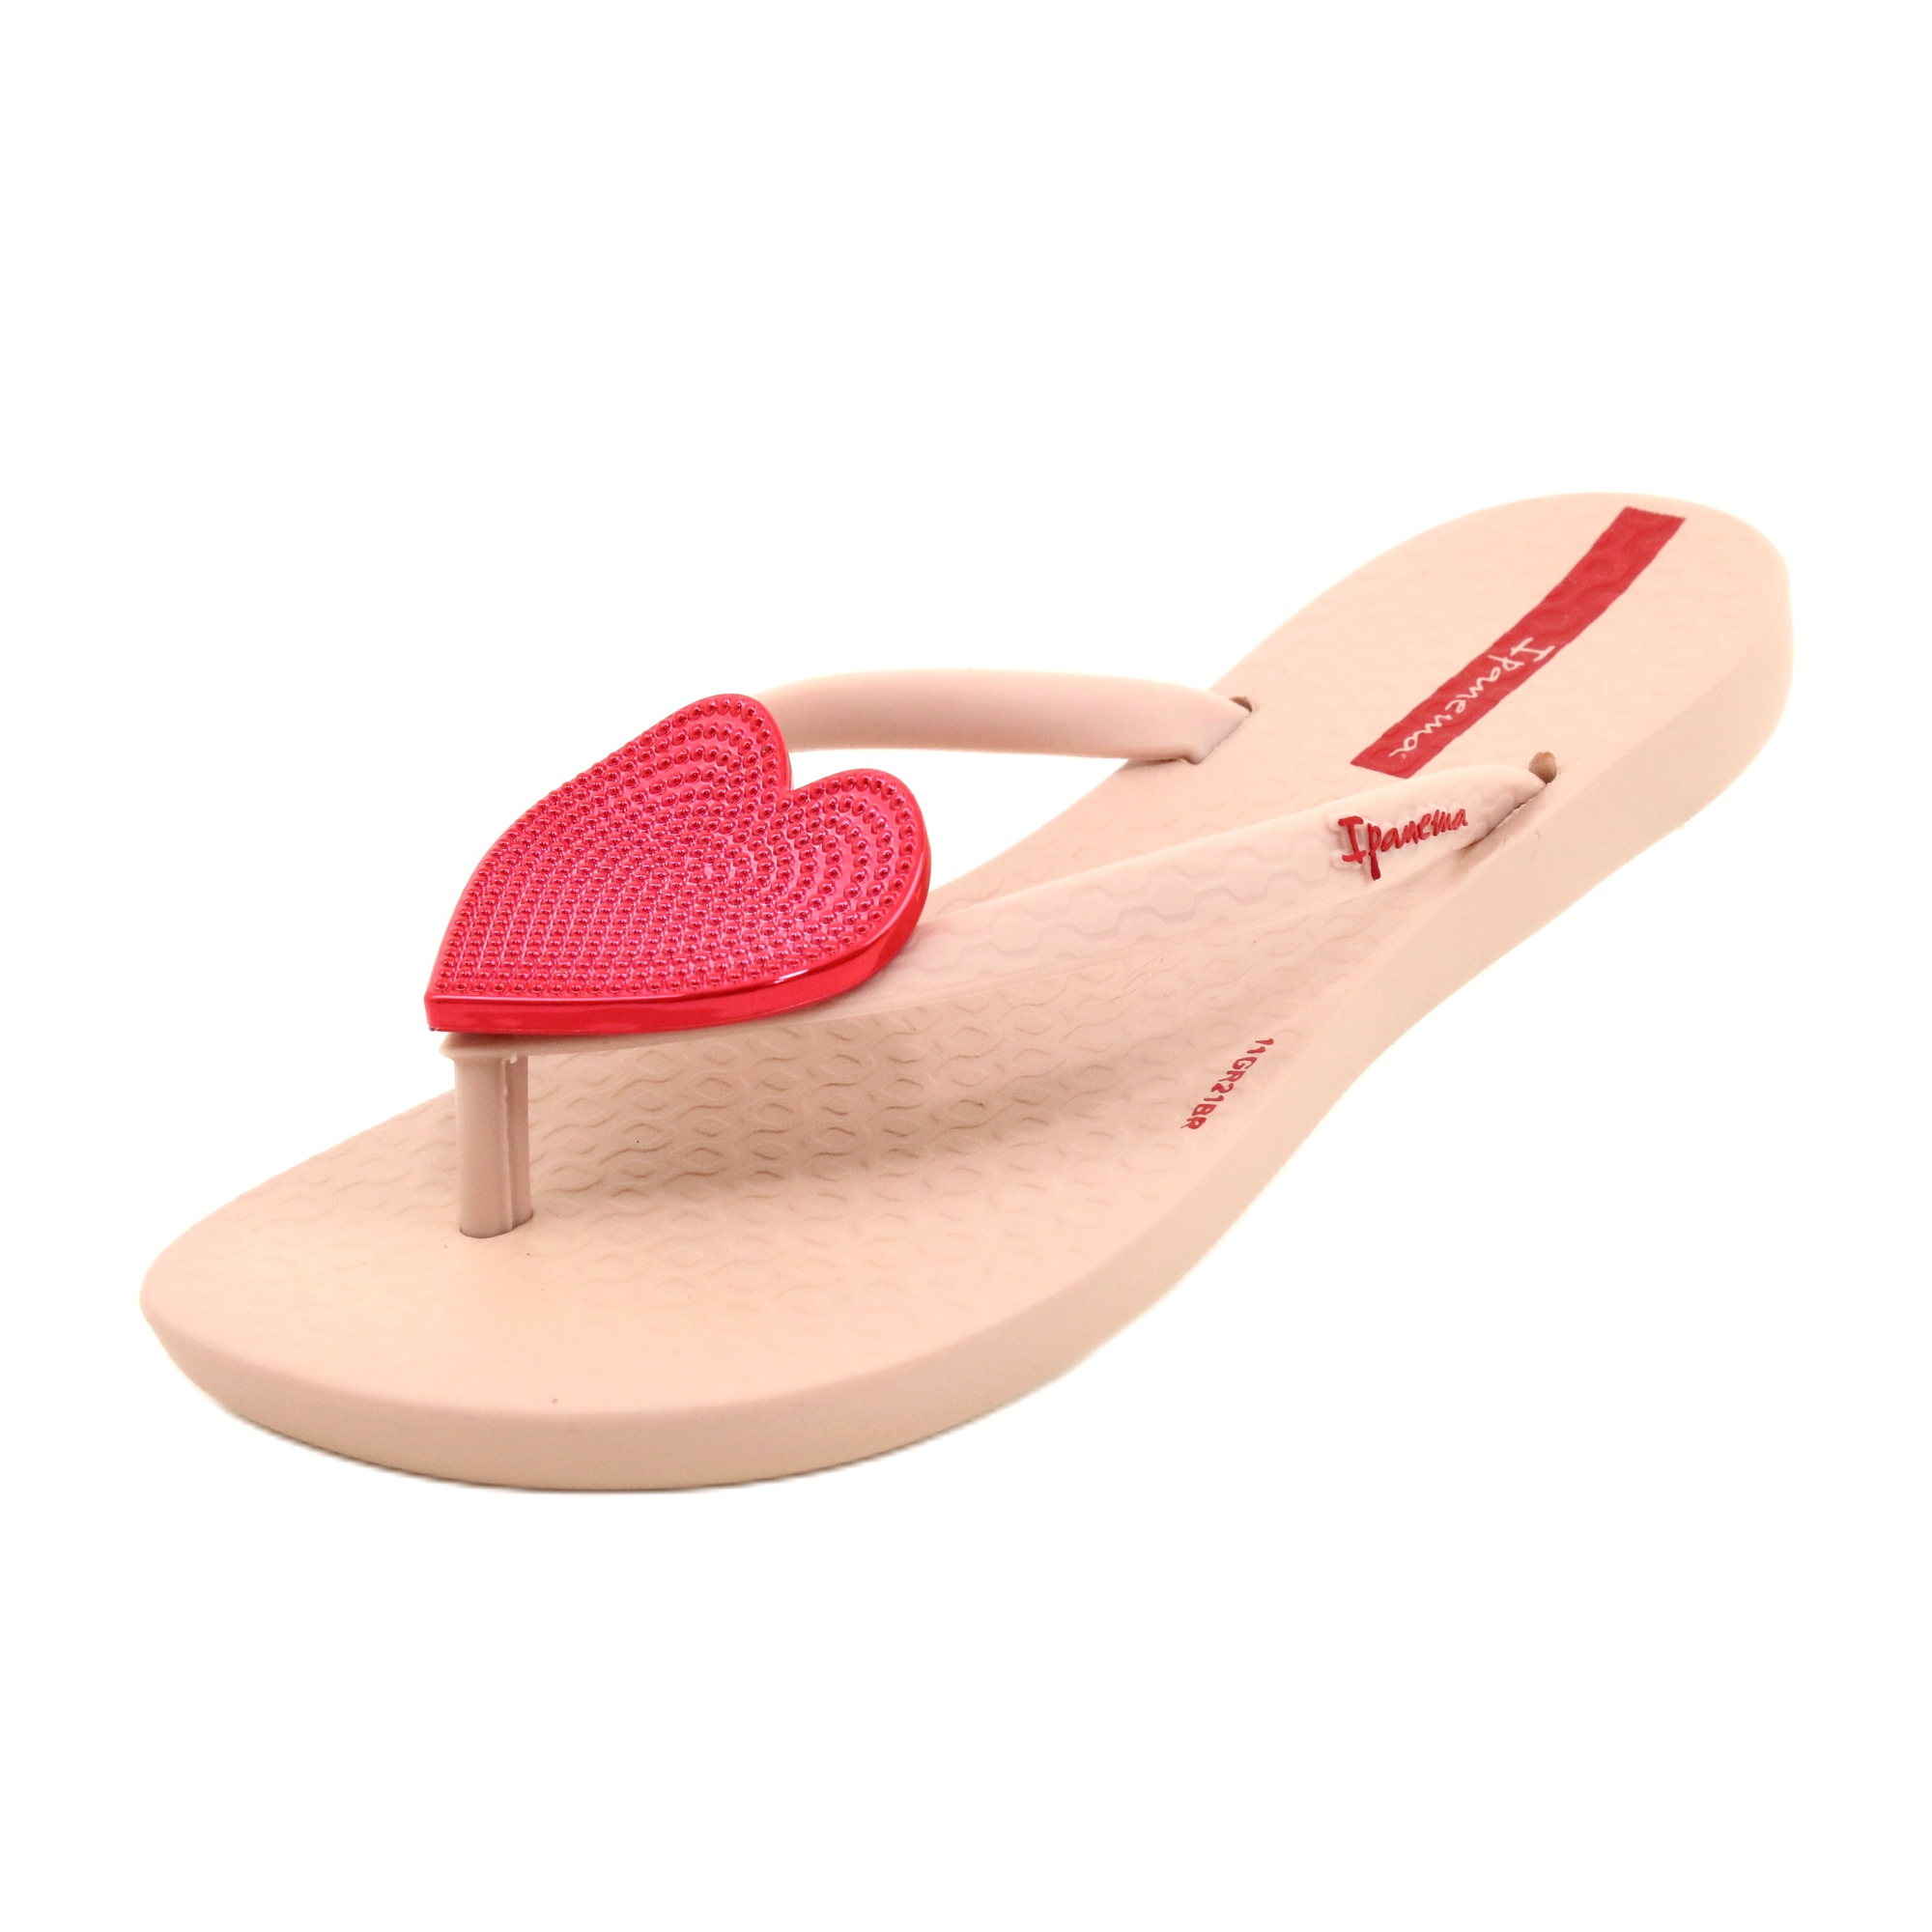 Zoeken Zelfrespect Nutteloos Mules / Flip-flops MAXI FASHION KIDS Ipanema 82598 red pink - KeeShoes